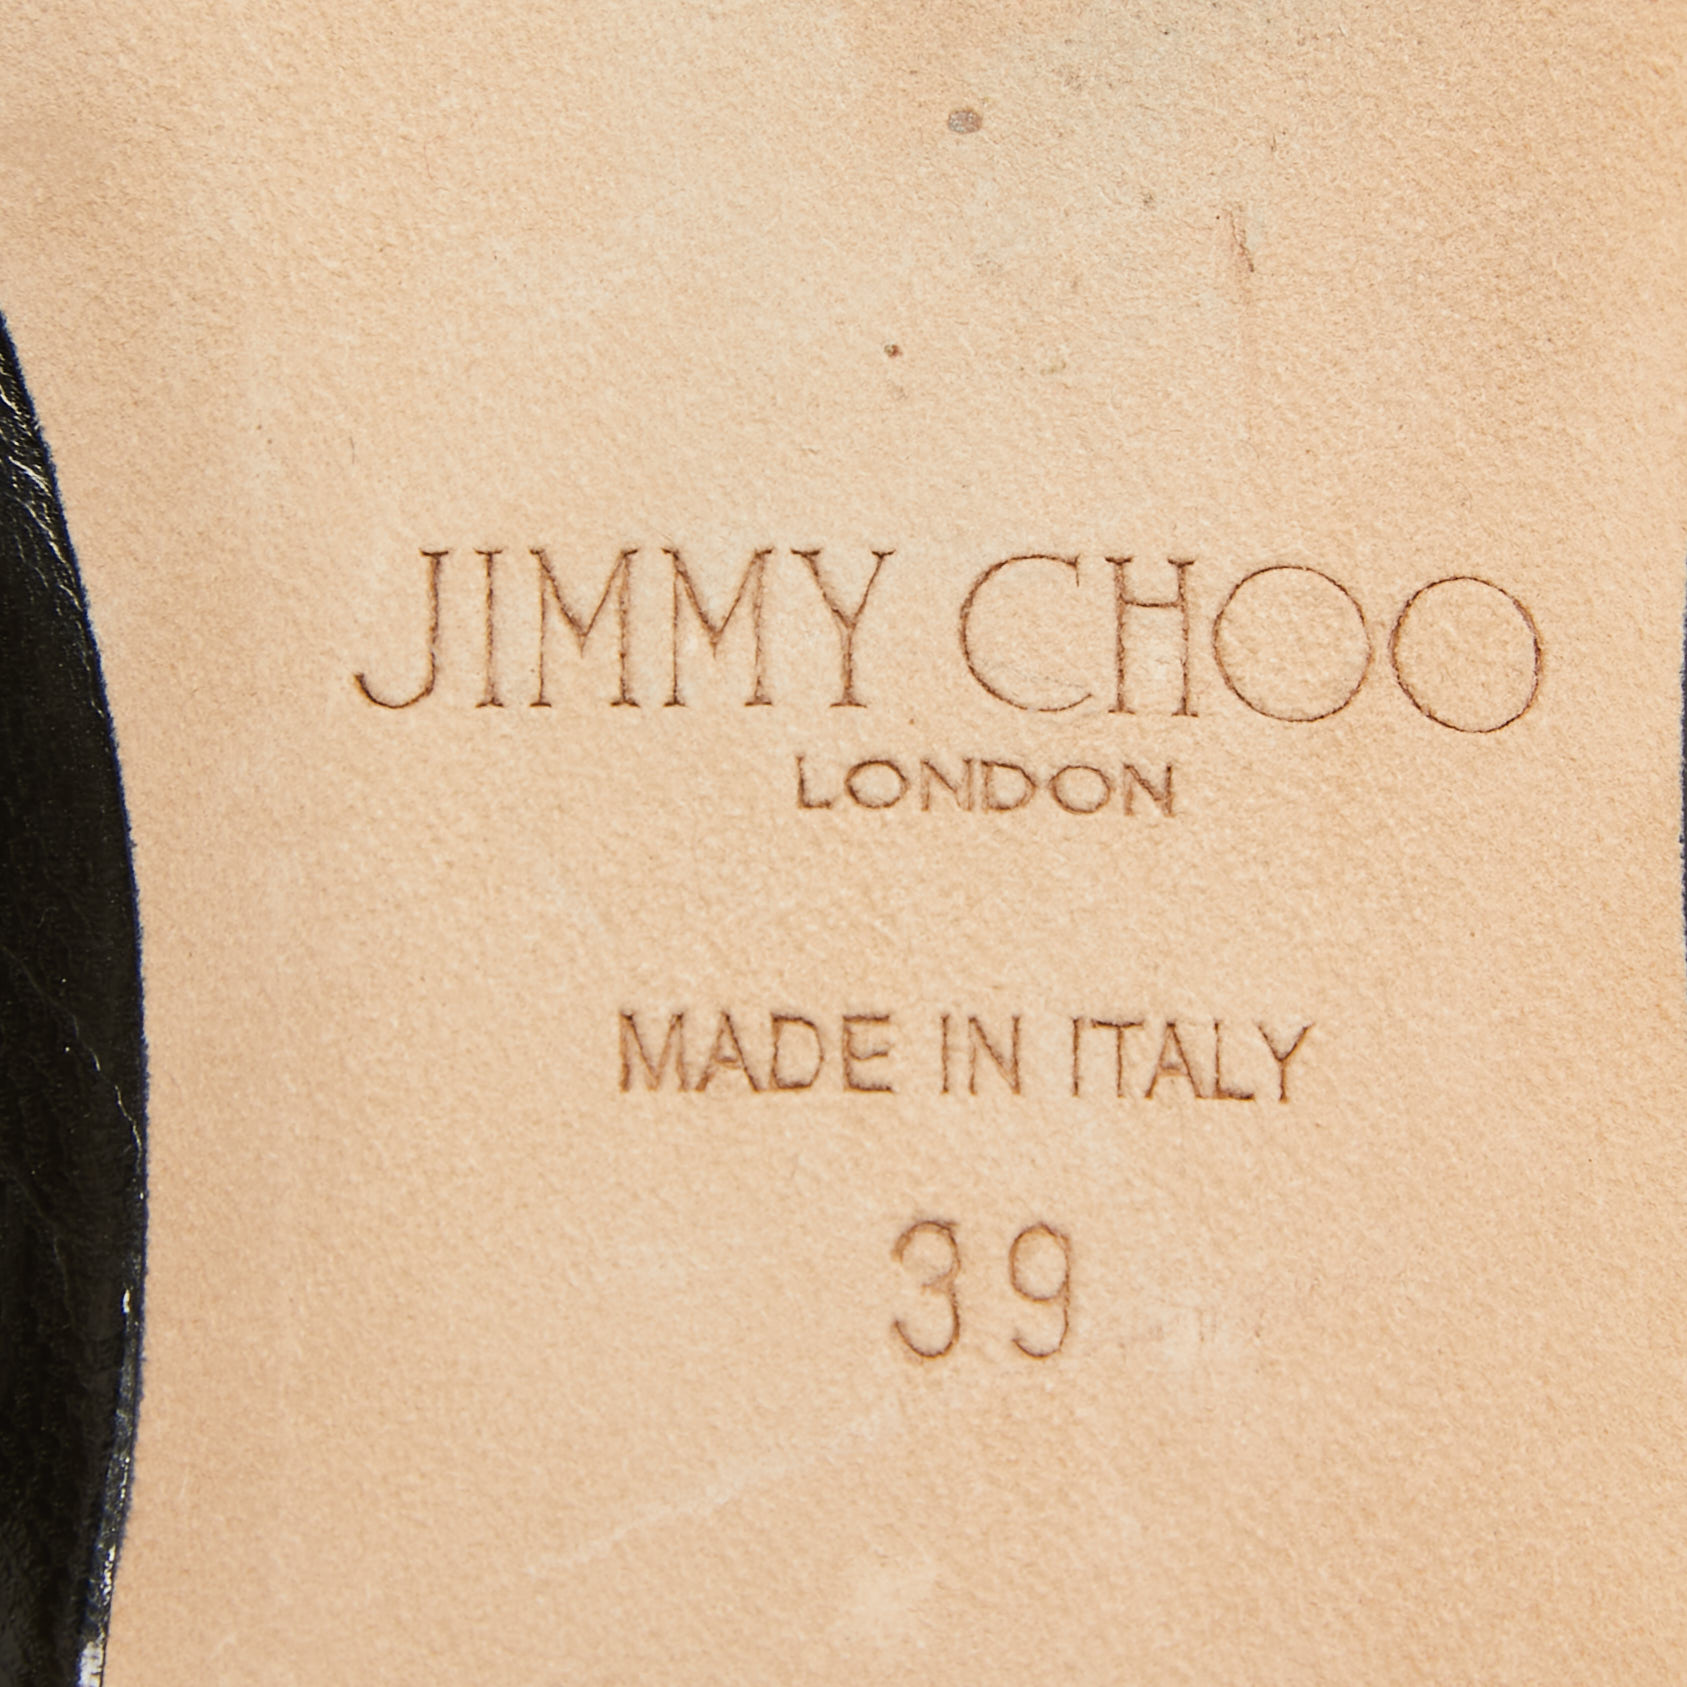 Jimmy Choo Black Leather Ballet Flats Size 39